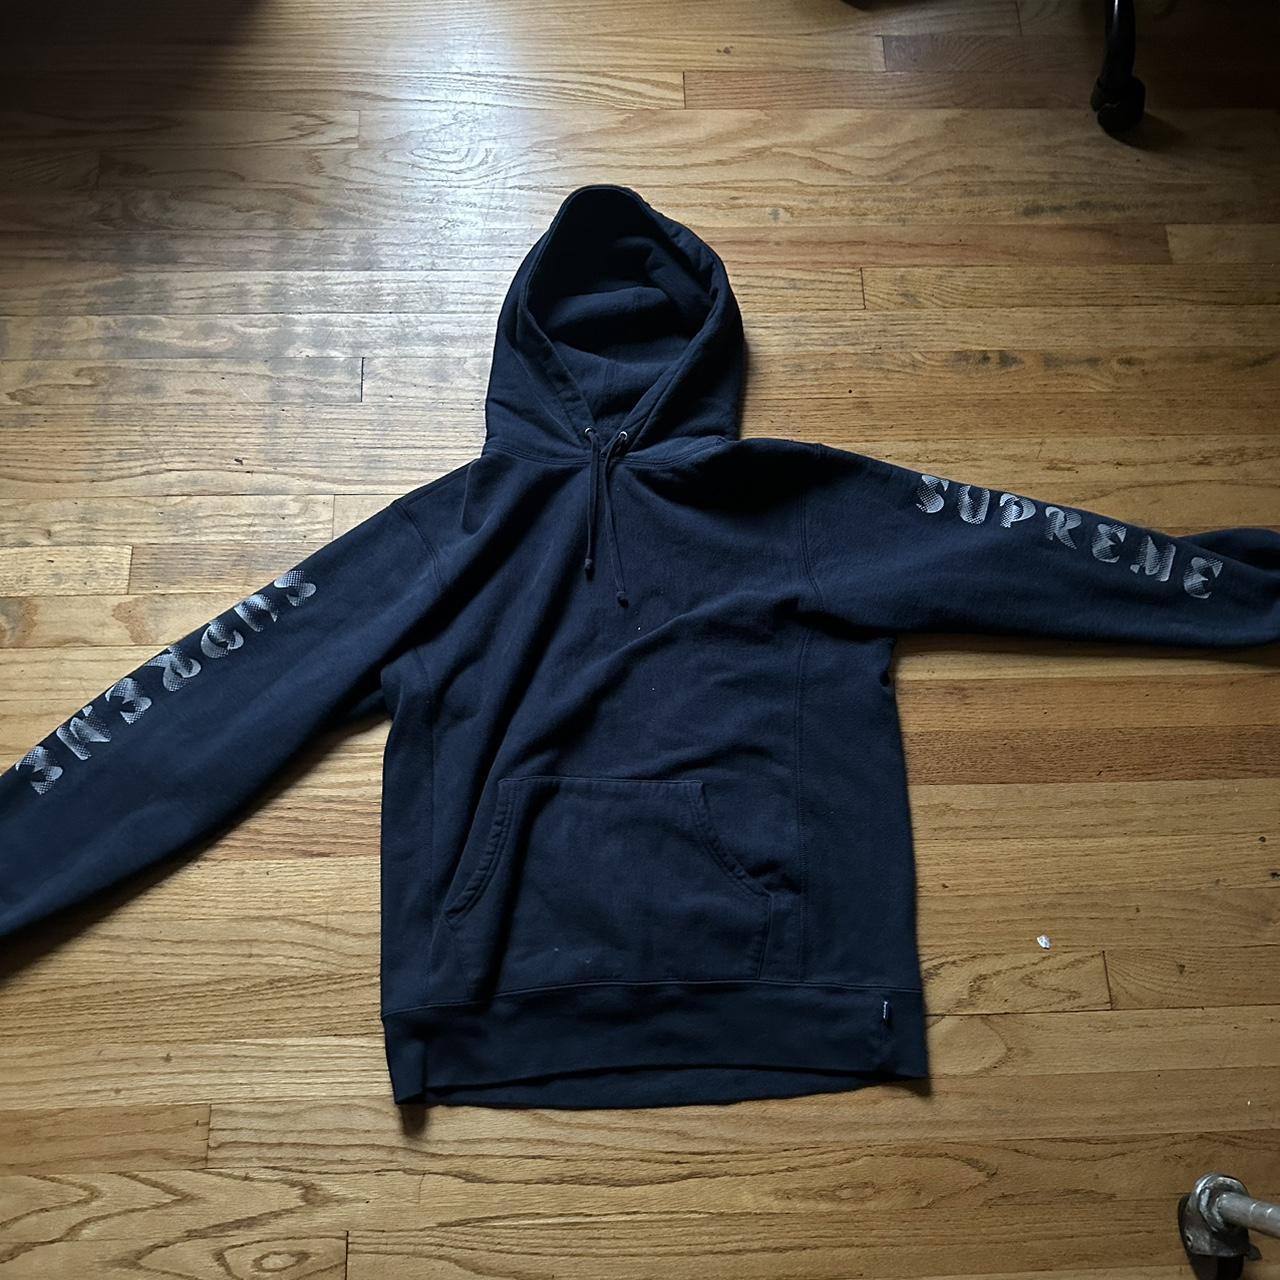 Dark blue supreme hoodie with gray letters - Depop